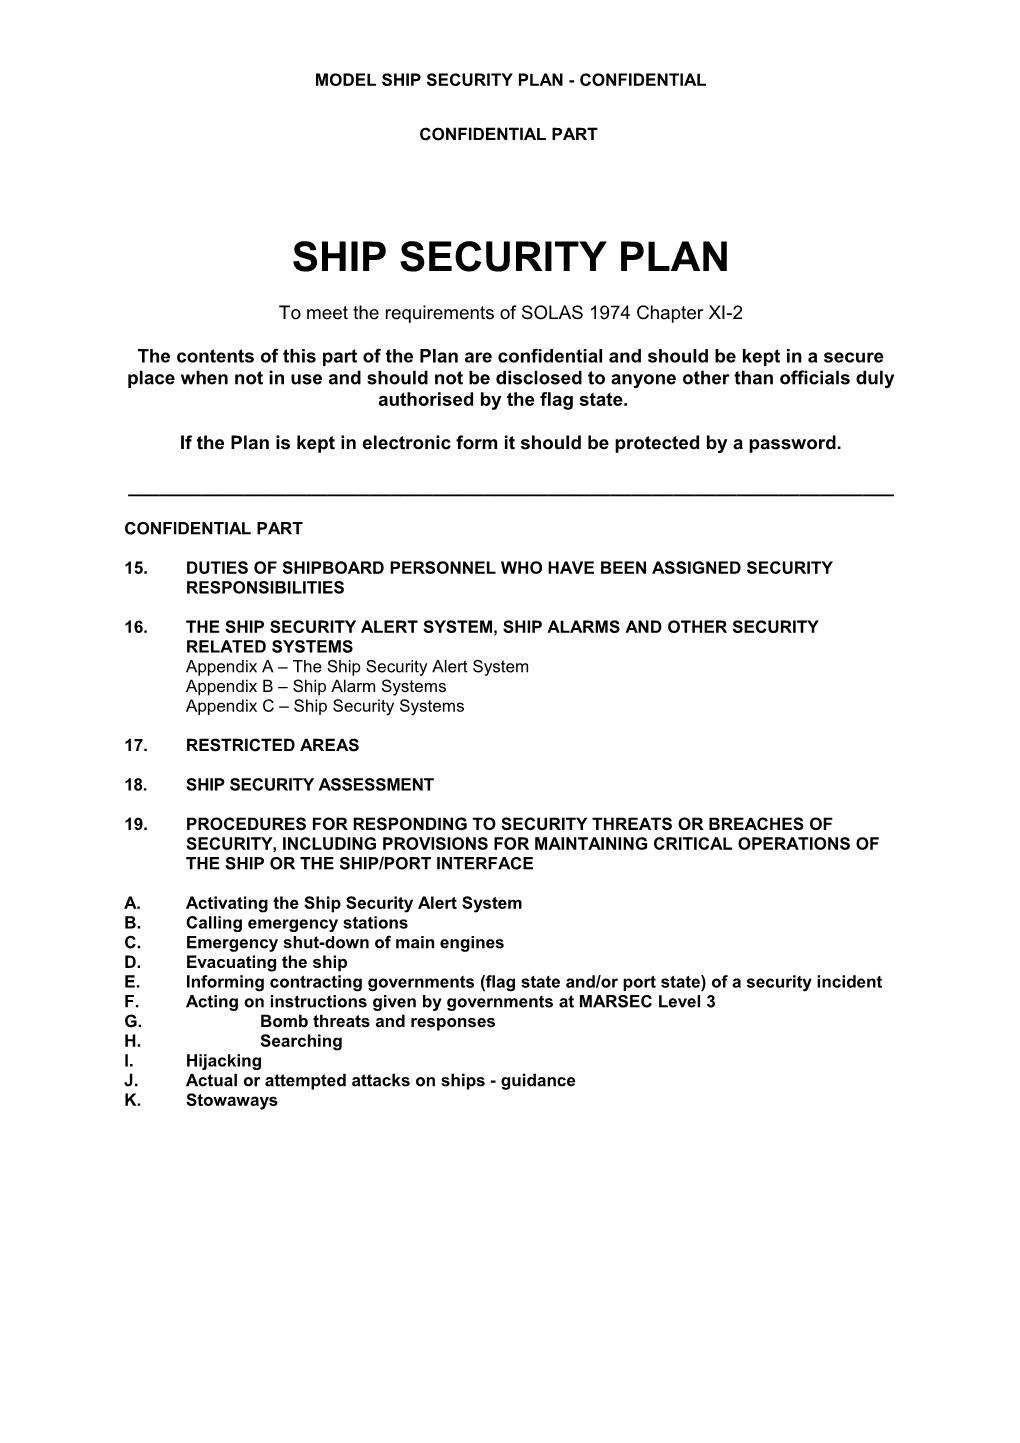 Model Ship Security Plan - Confidential